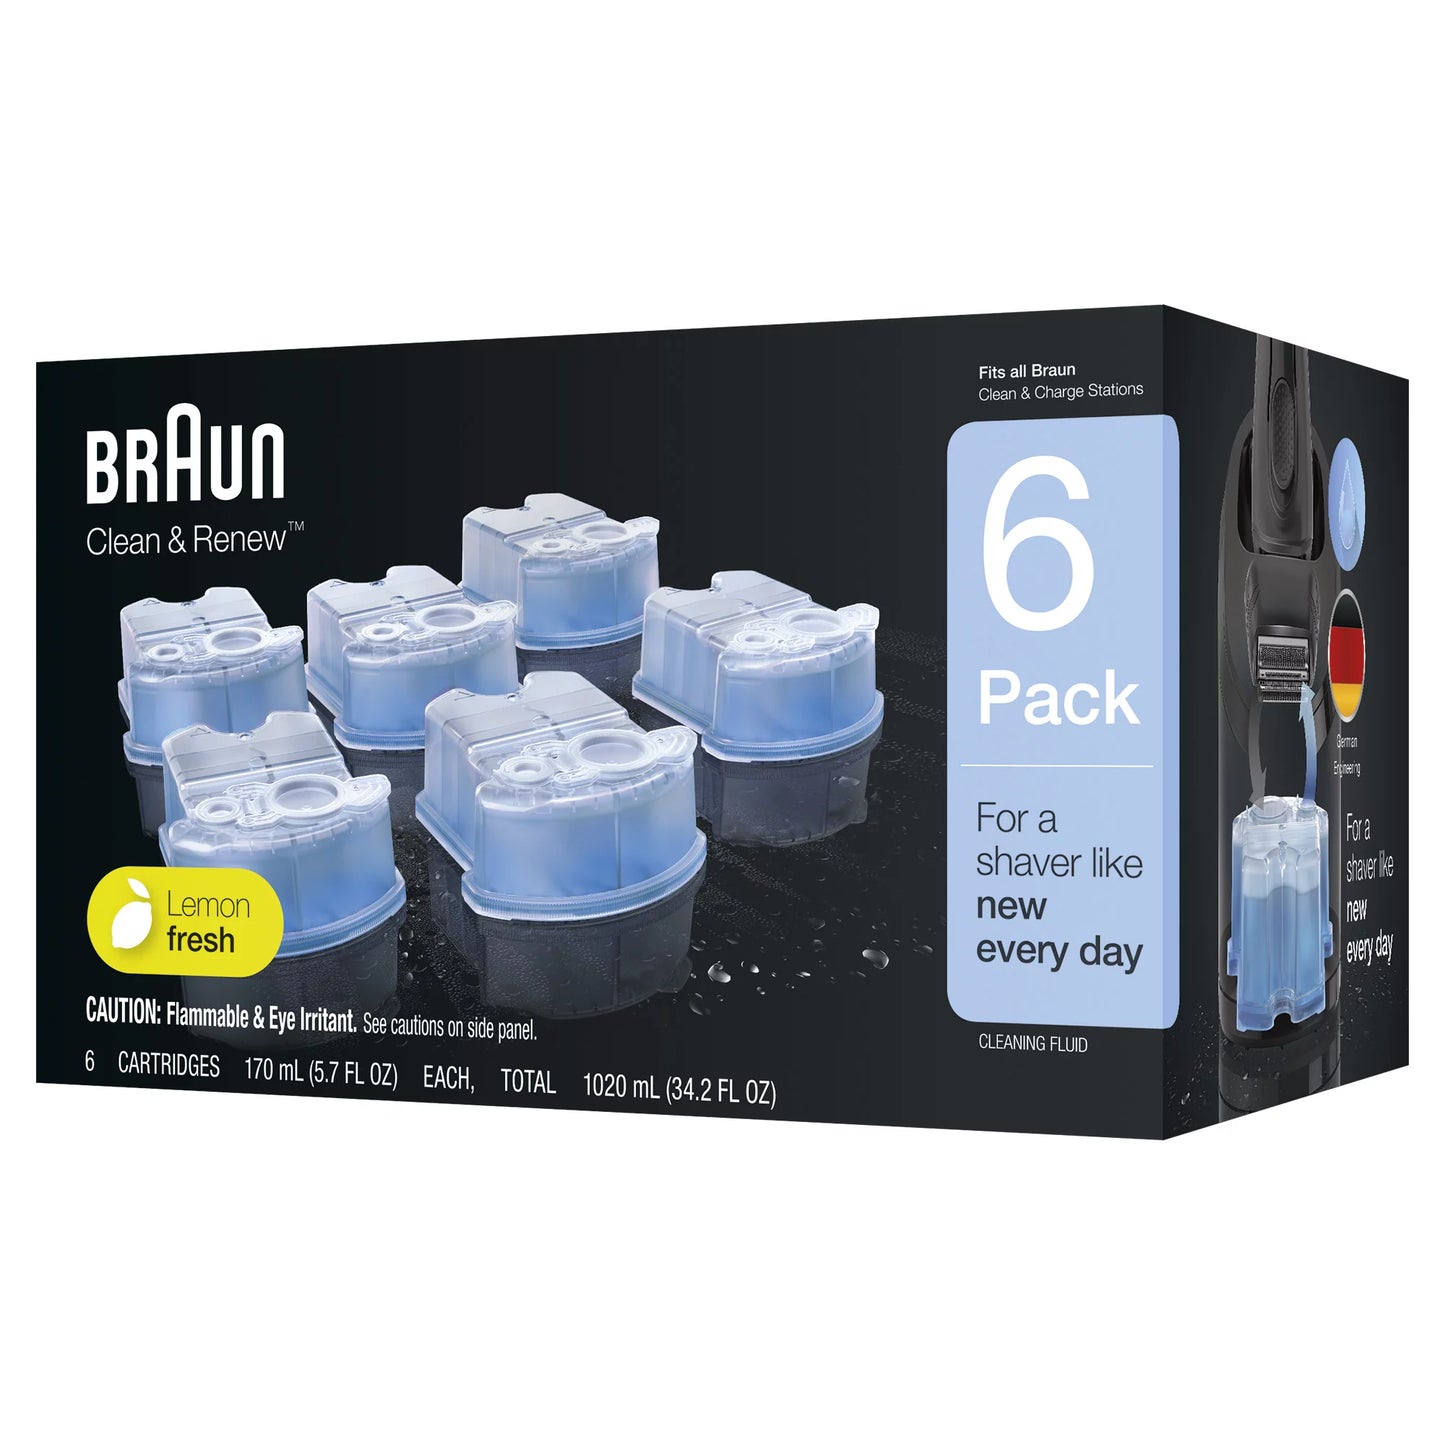 Braun Clean & Renew Razor Replacement Head Refill Cartridges CCR, Lemon Fresh, 6 Pk, 34.2 fl oz